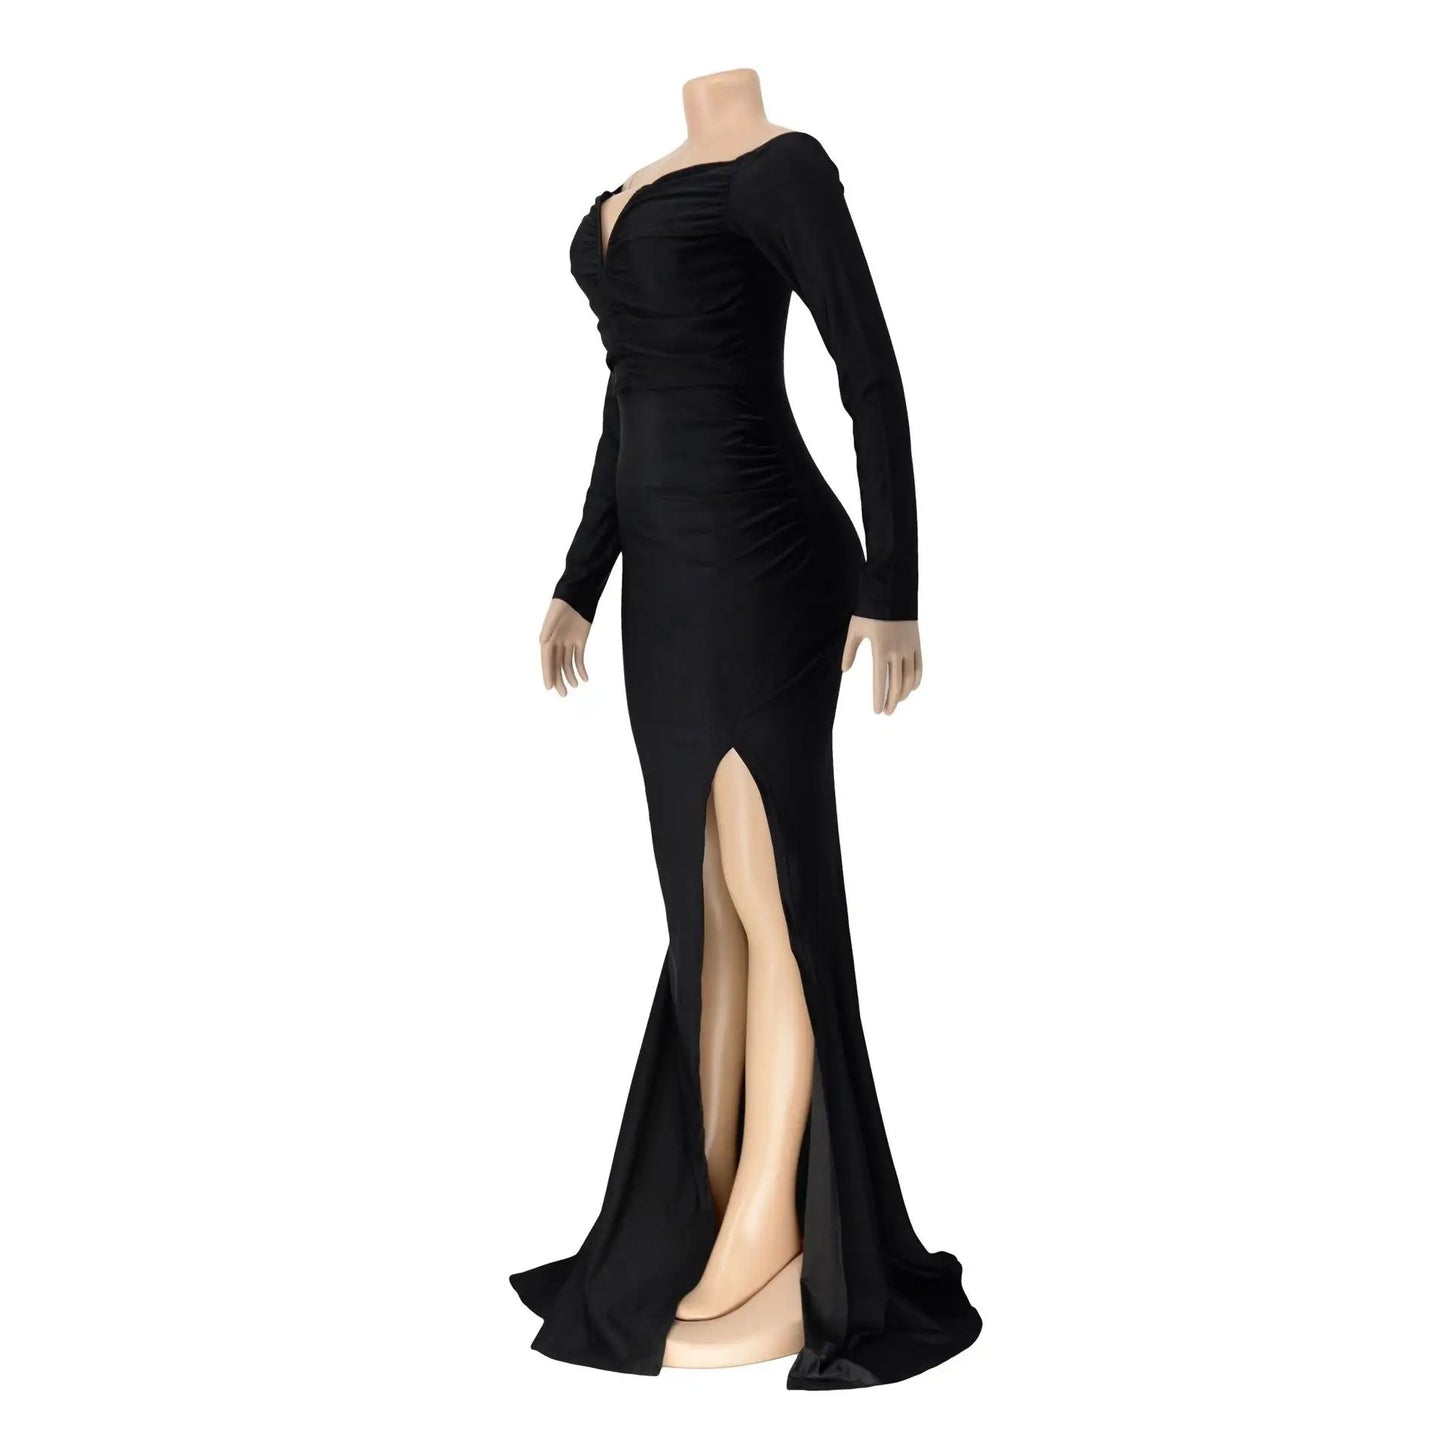 Kerry Elle Dress (Black)